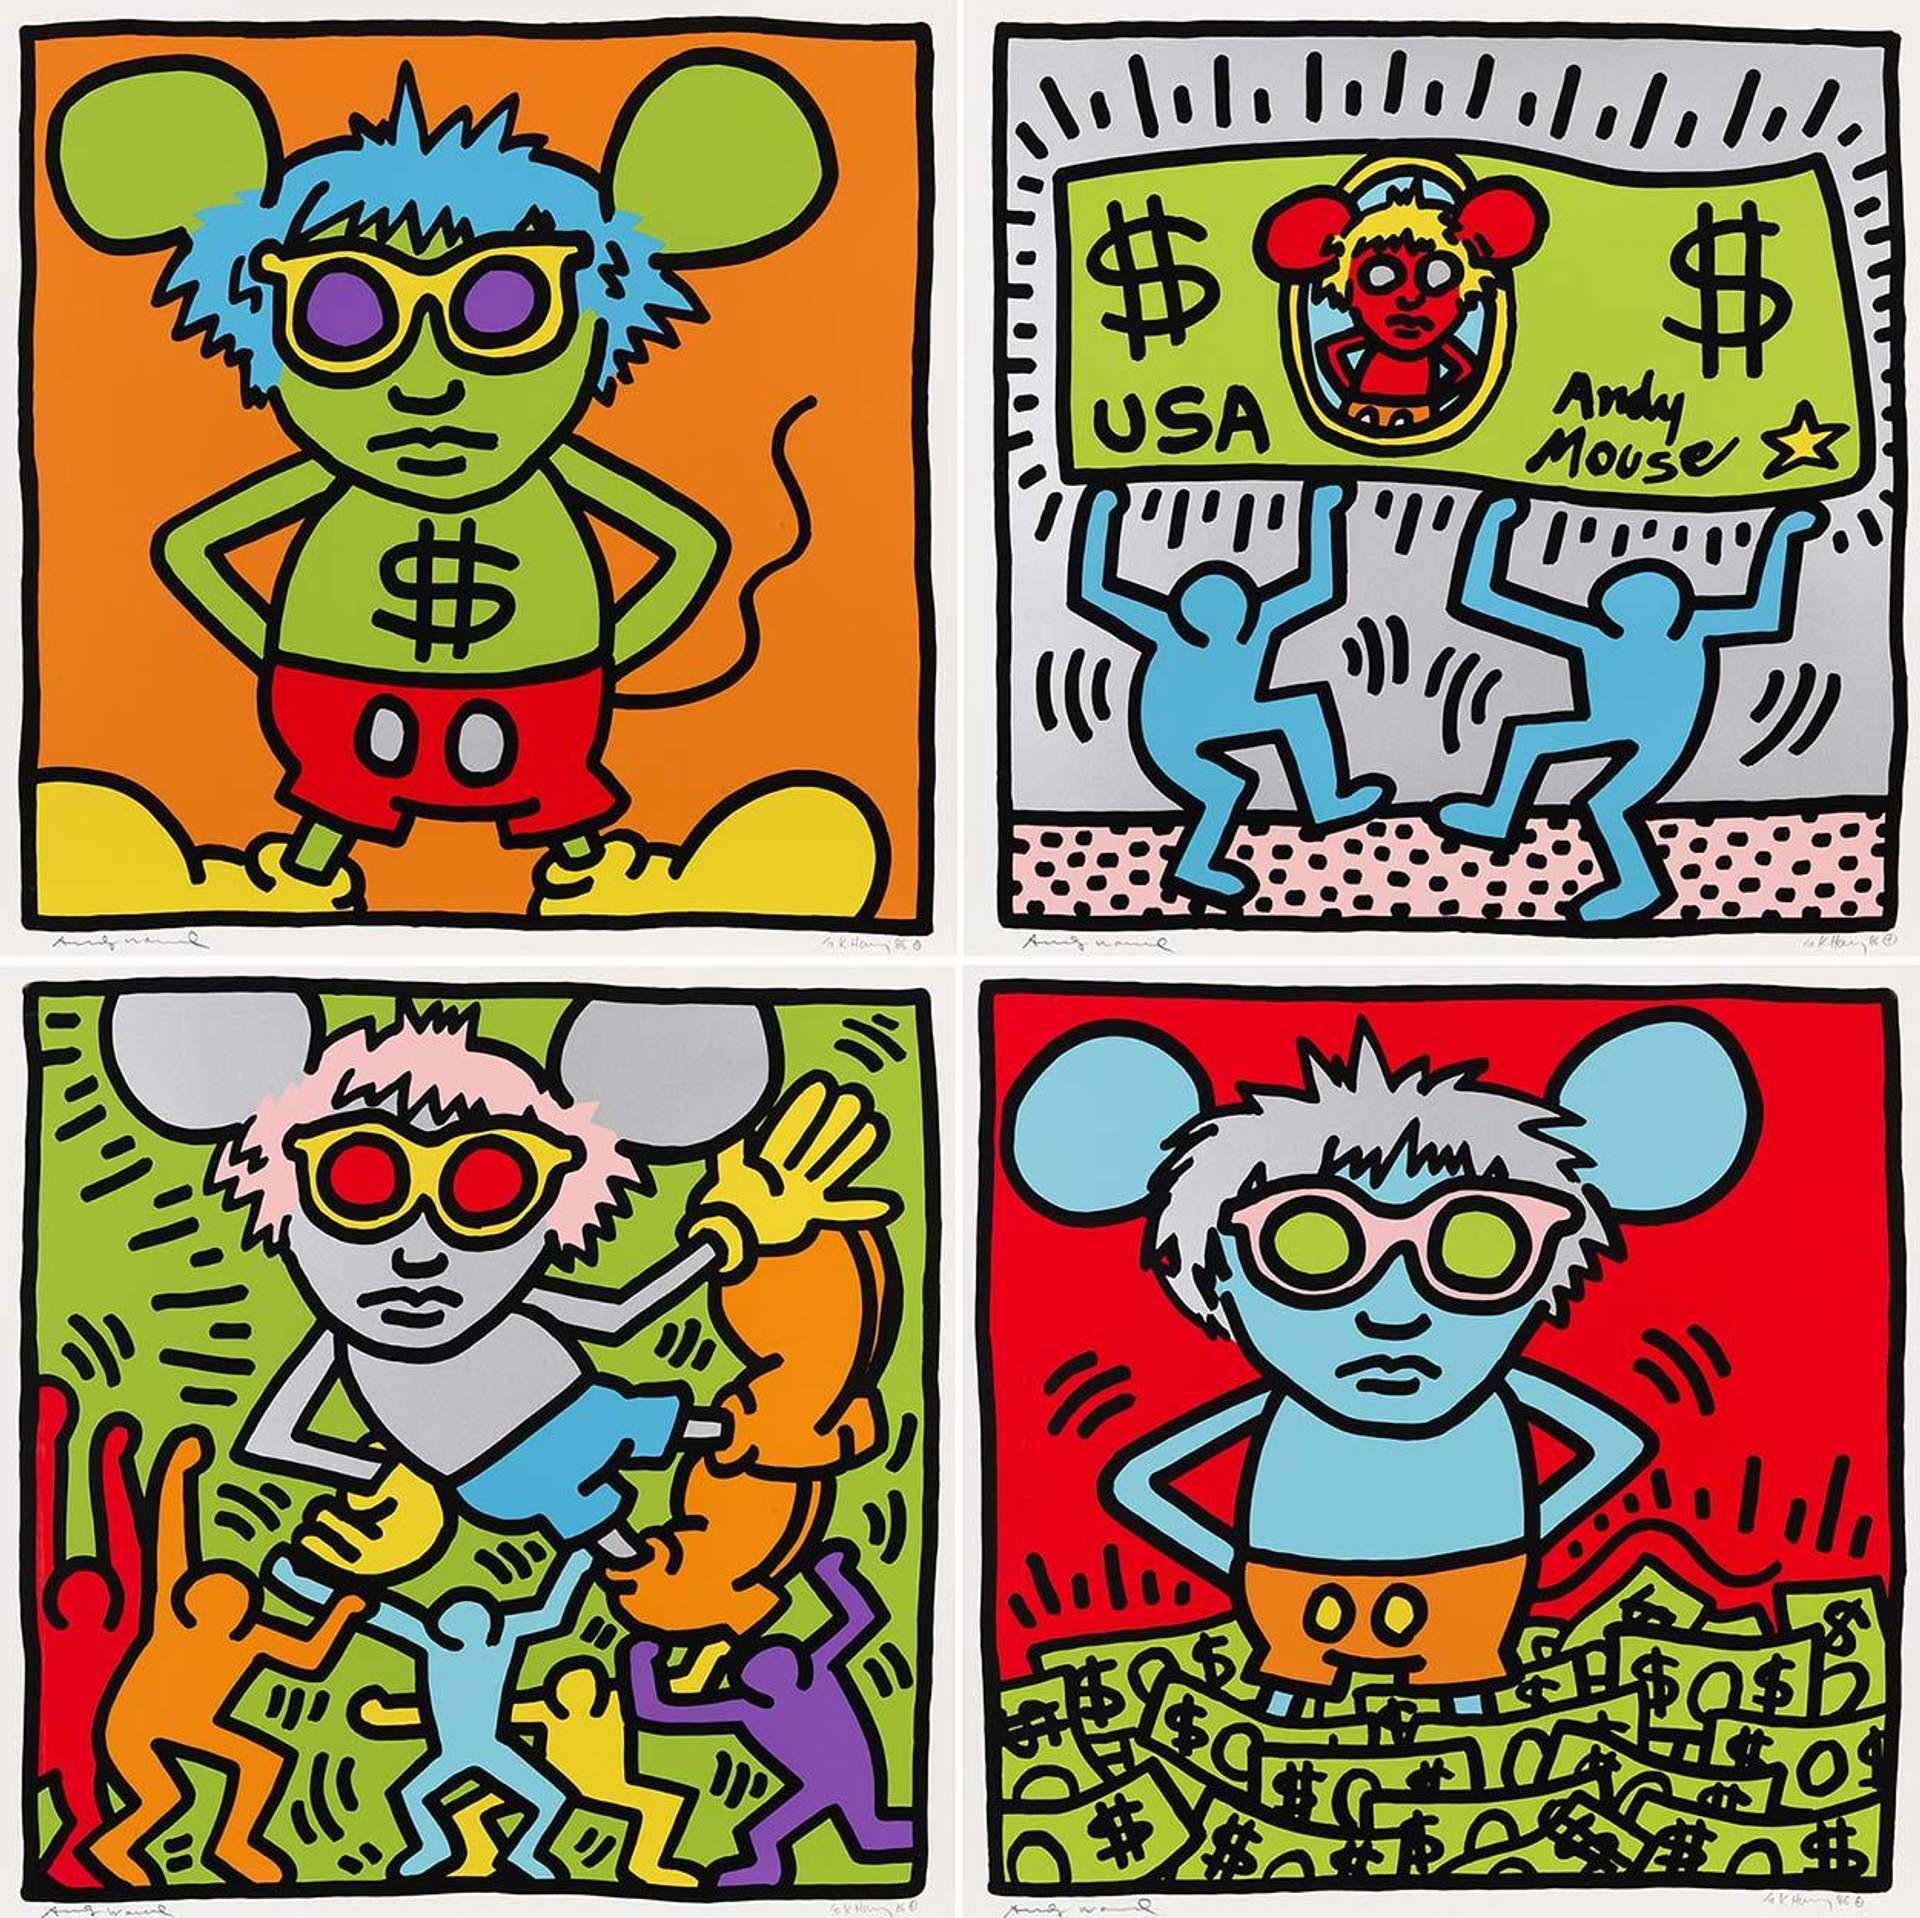 Keith Haring's Reimagining of Friendship Through Cartoon